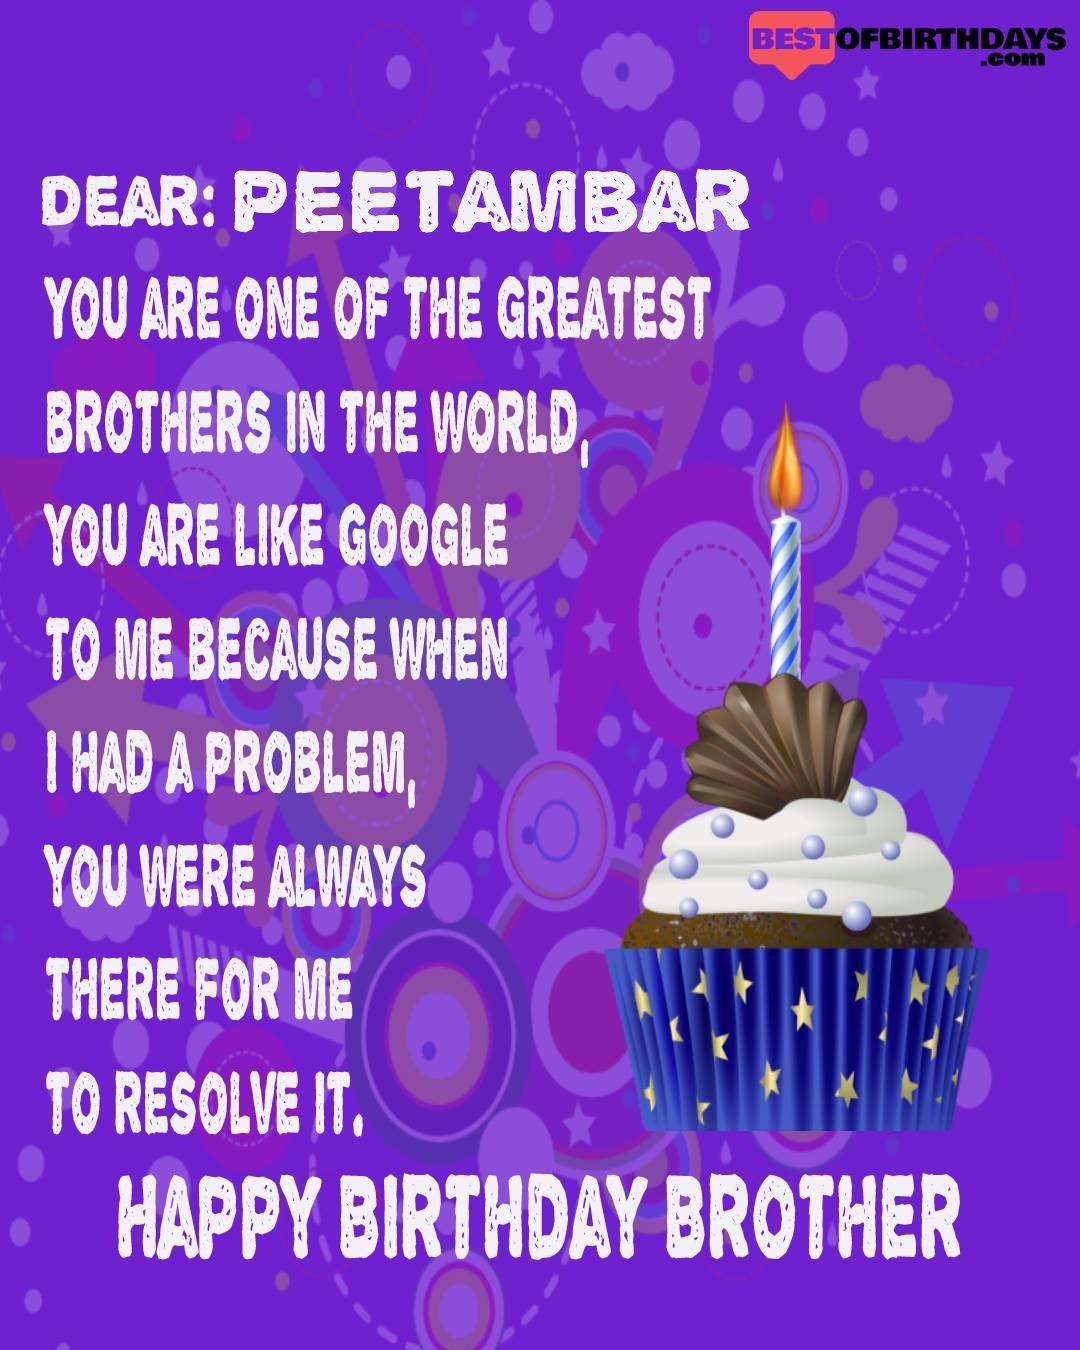 Happy birthday peetambar bhai brother bro